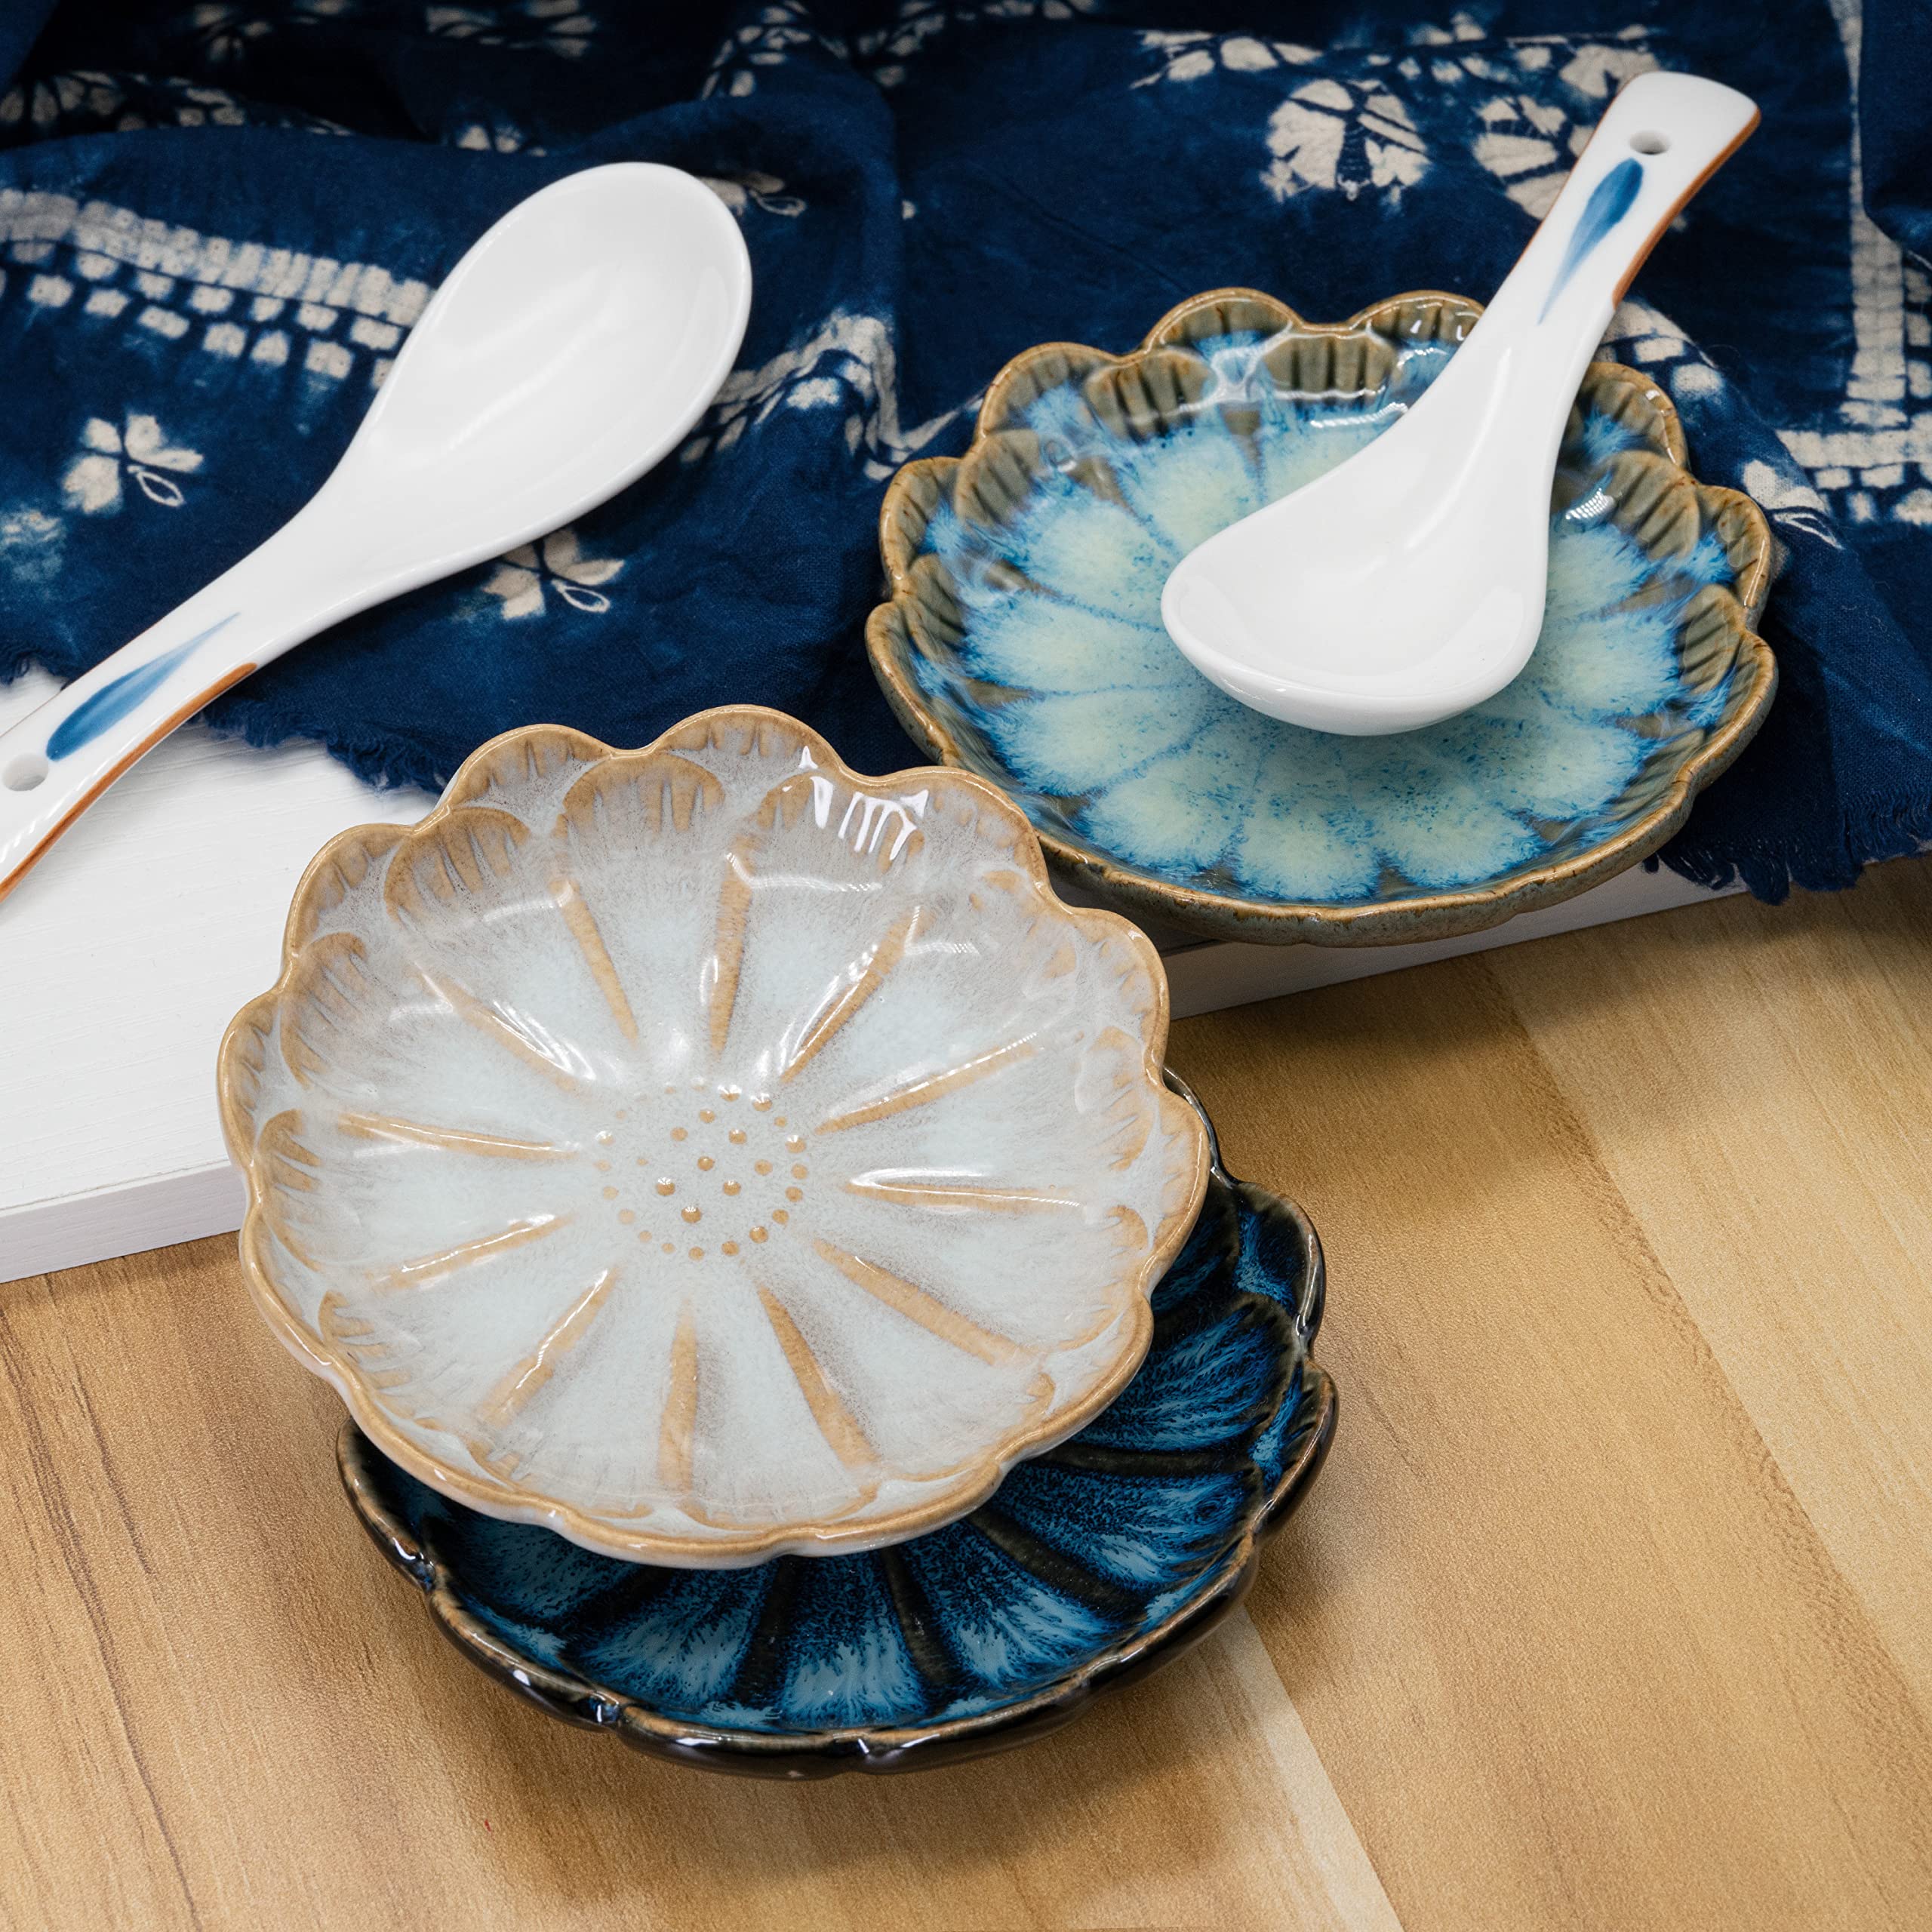 LINXUXIE Ceramic Stable Spoon Rest 3PCS Multifunctional Glaze Ceramic Dinner Plates Set Heat Resistant Porcelain Spoon Utensil Holder in Kitchen Counter Kitchen Dining Table Decor (Sunflower 3PCS)